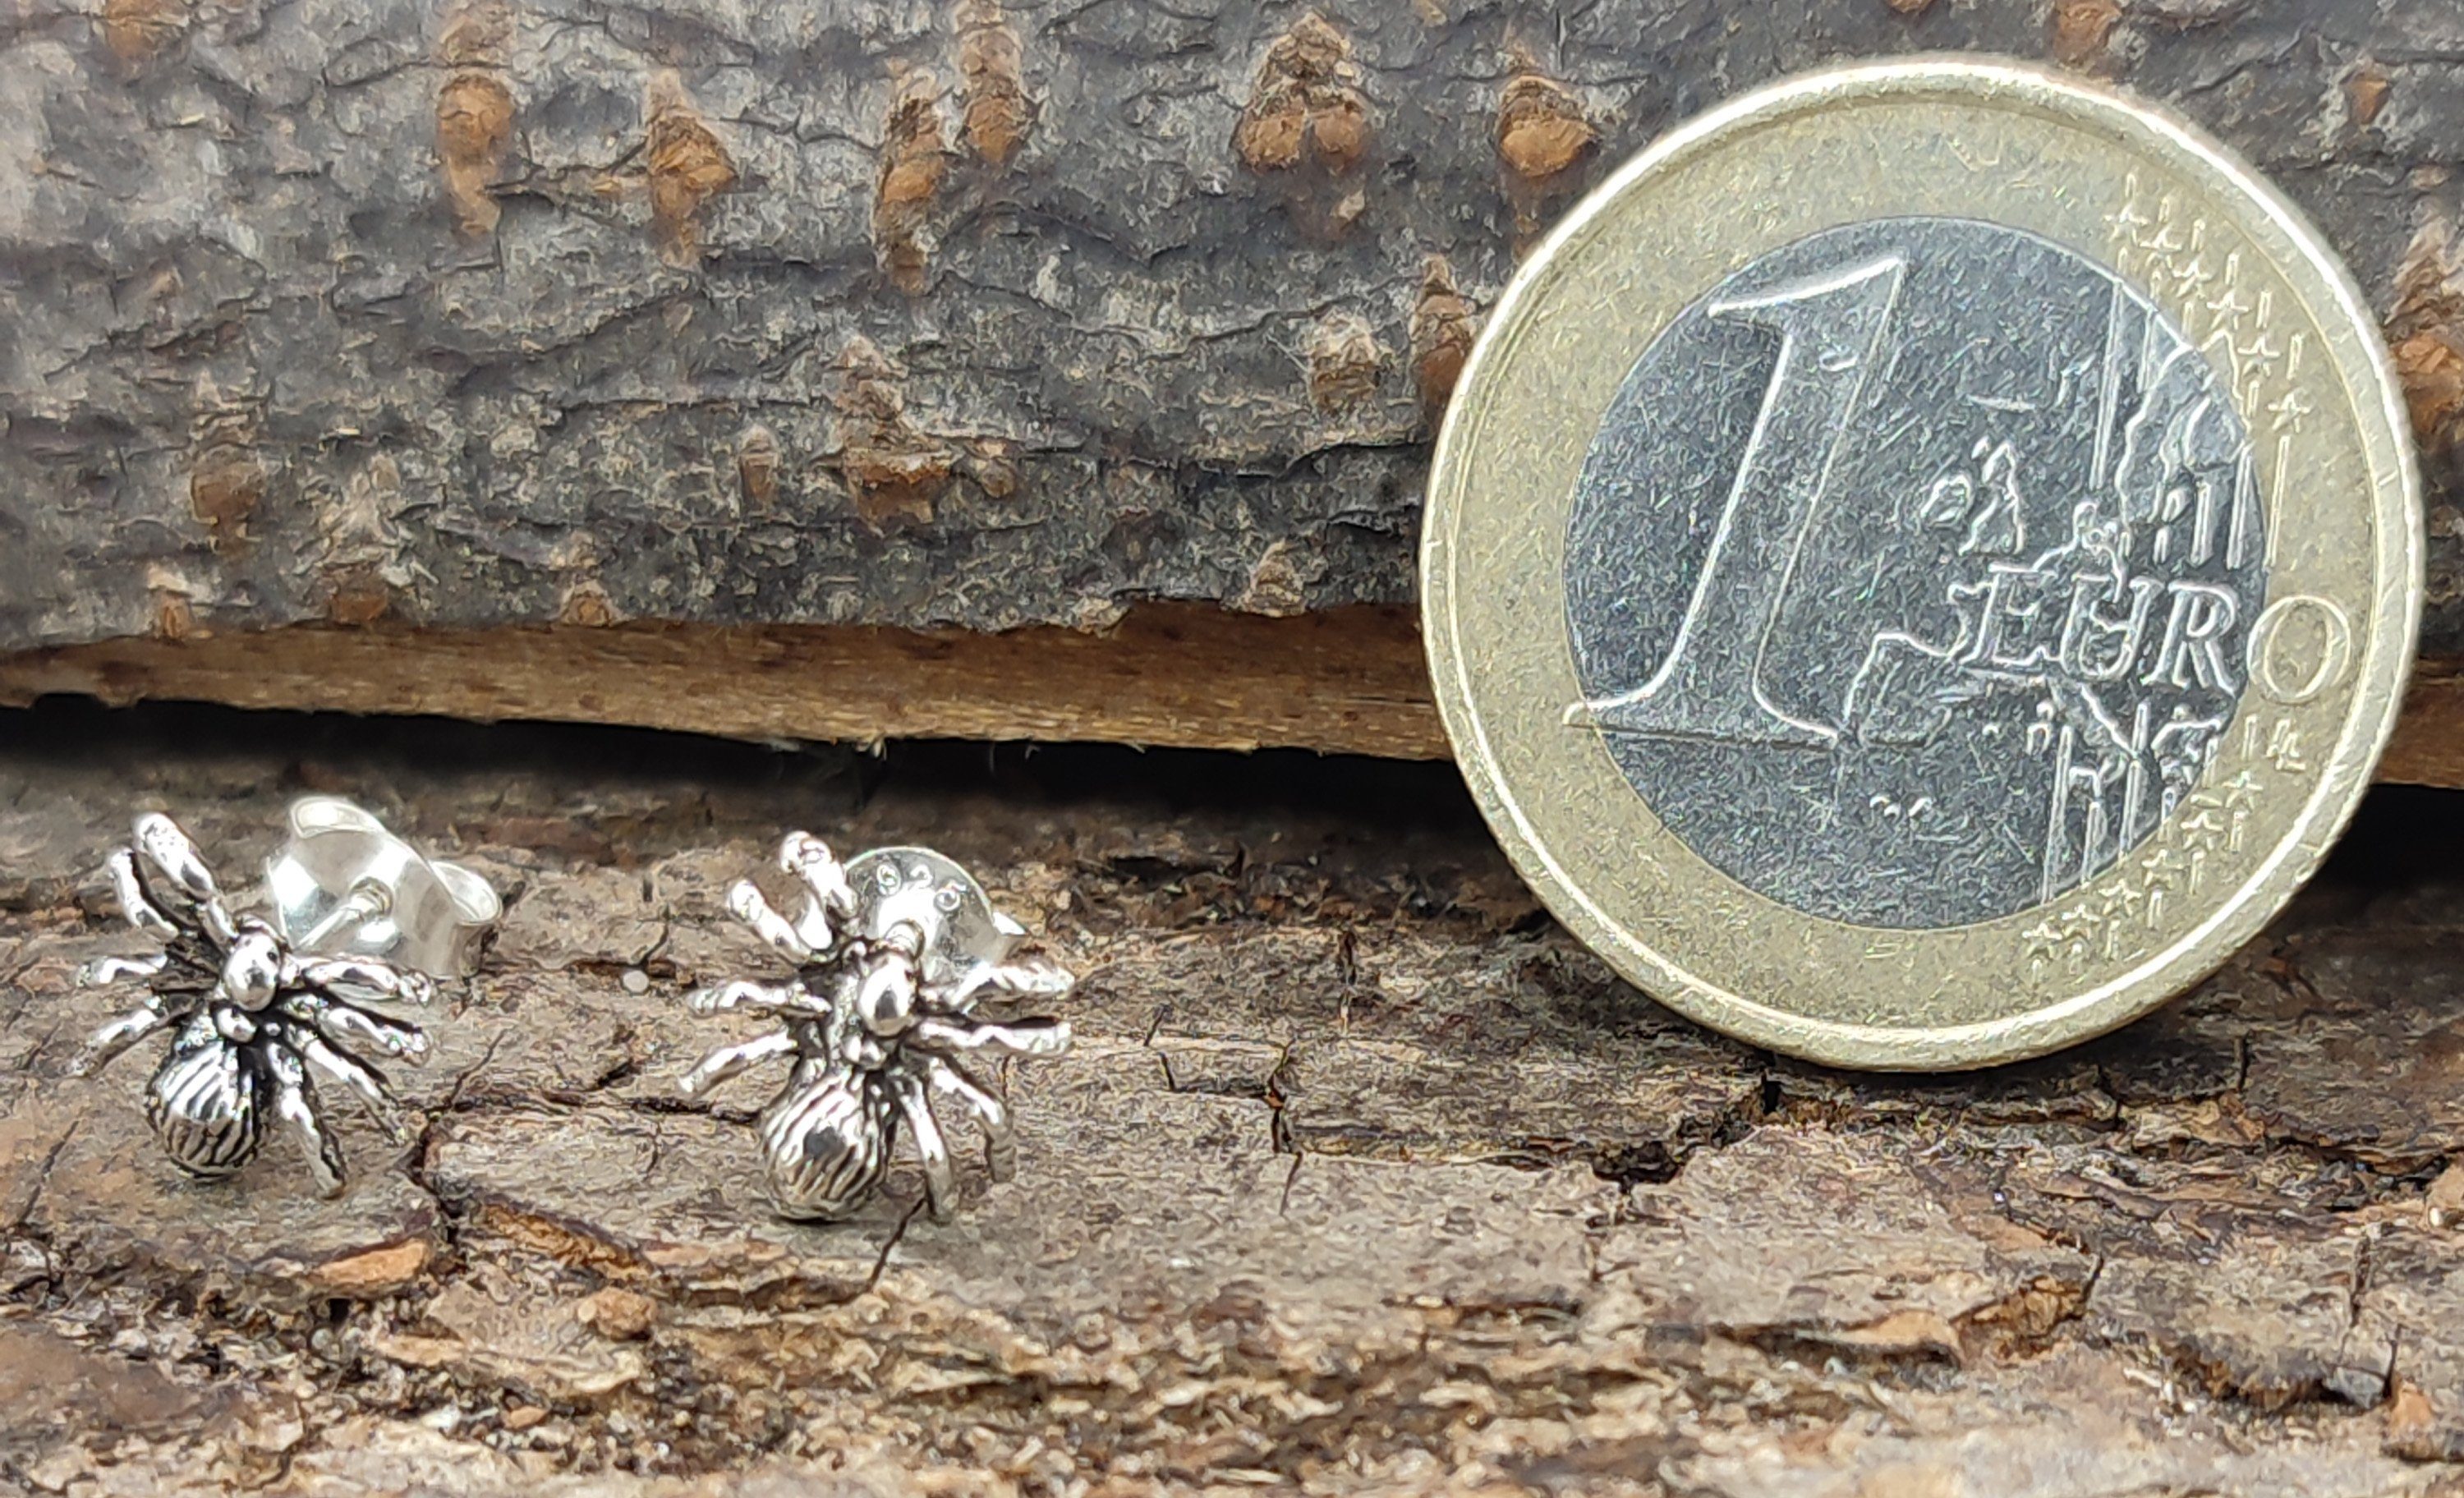 925 Ohrring Ohrringe Leather Ohr Spinne Paar Spinnen Paarpreis of Ohrstecker Kiss Silber Silber